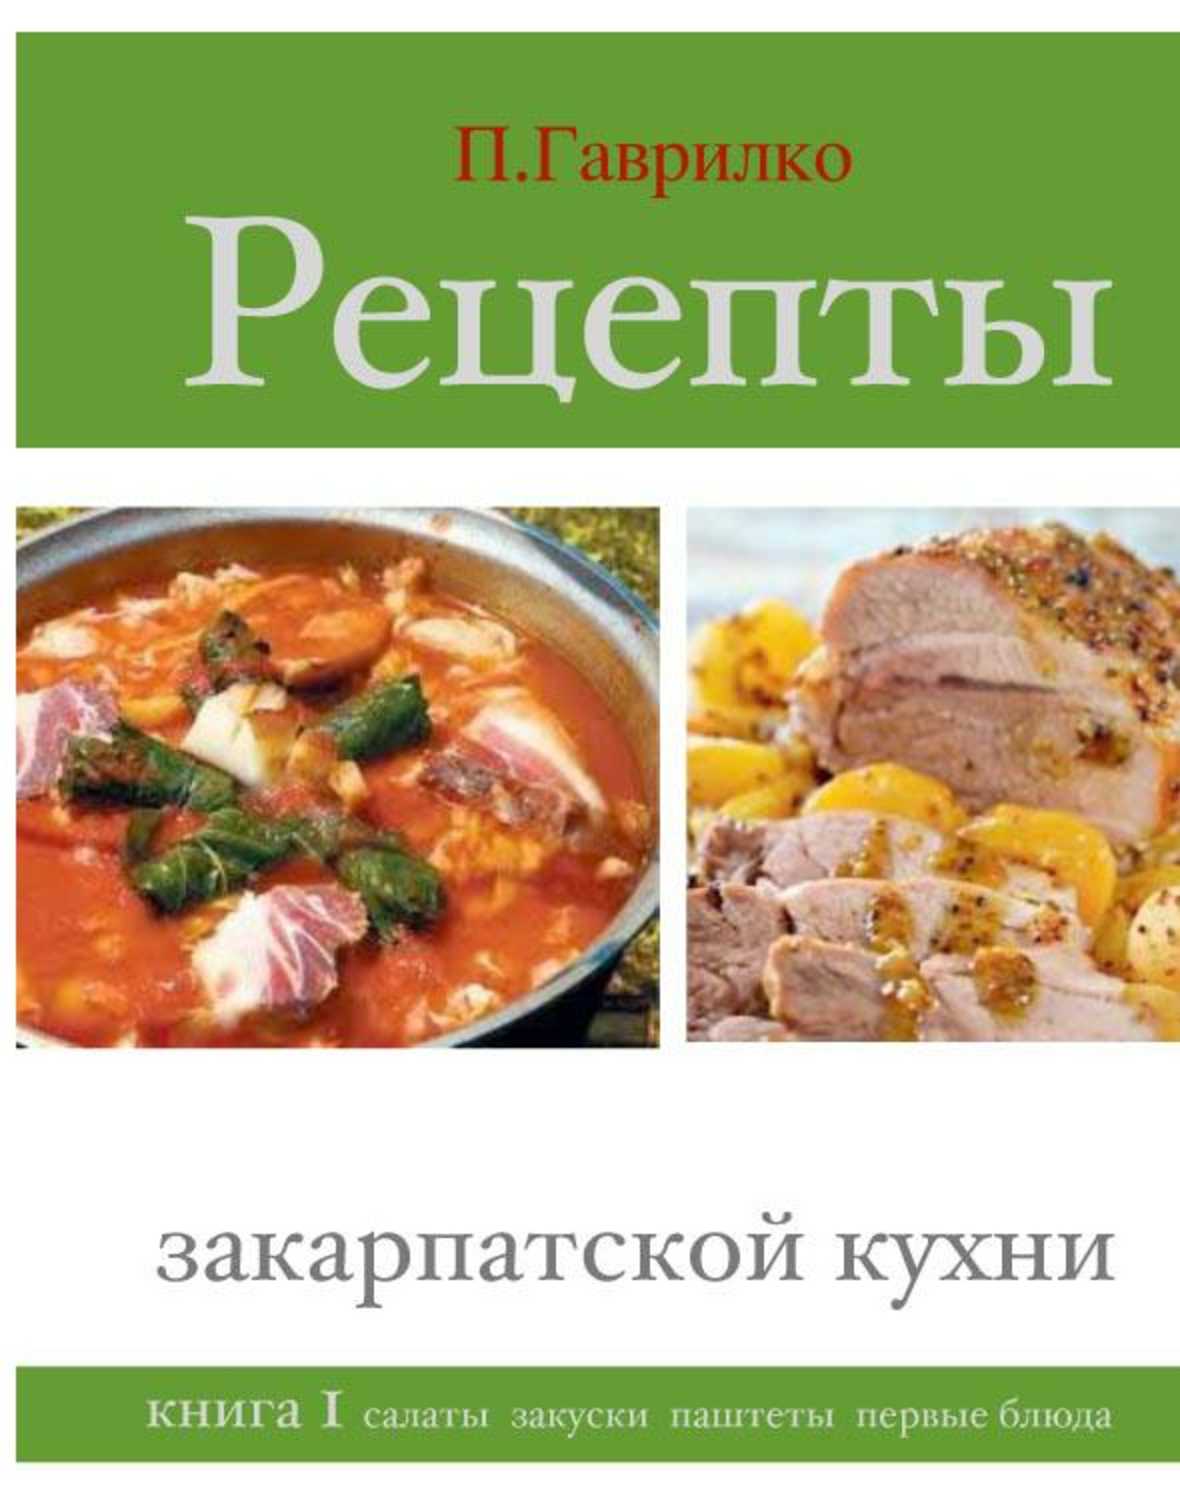 П. Гаврилко Петр - «Рецепты закарпатской кухни. Книга 1»